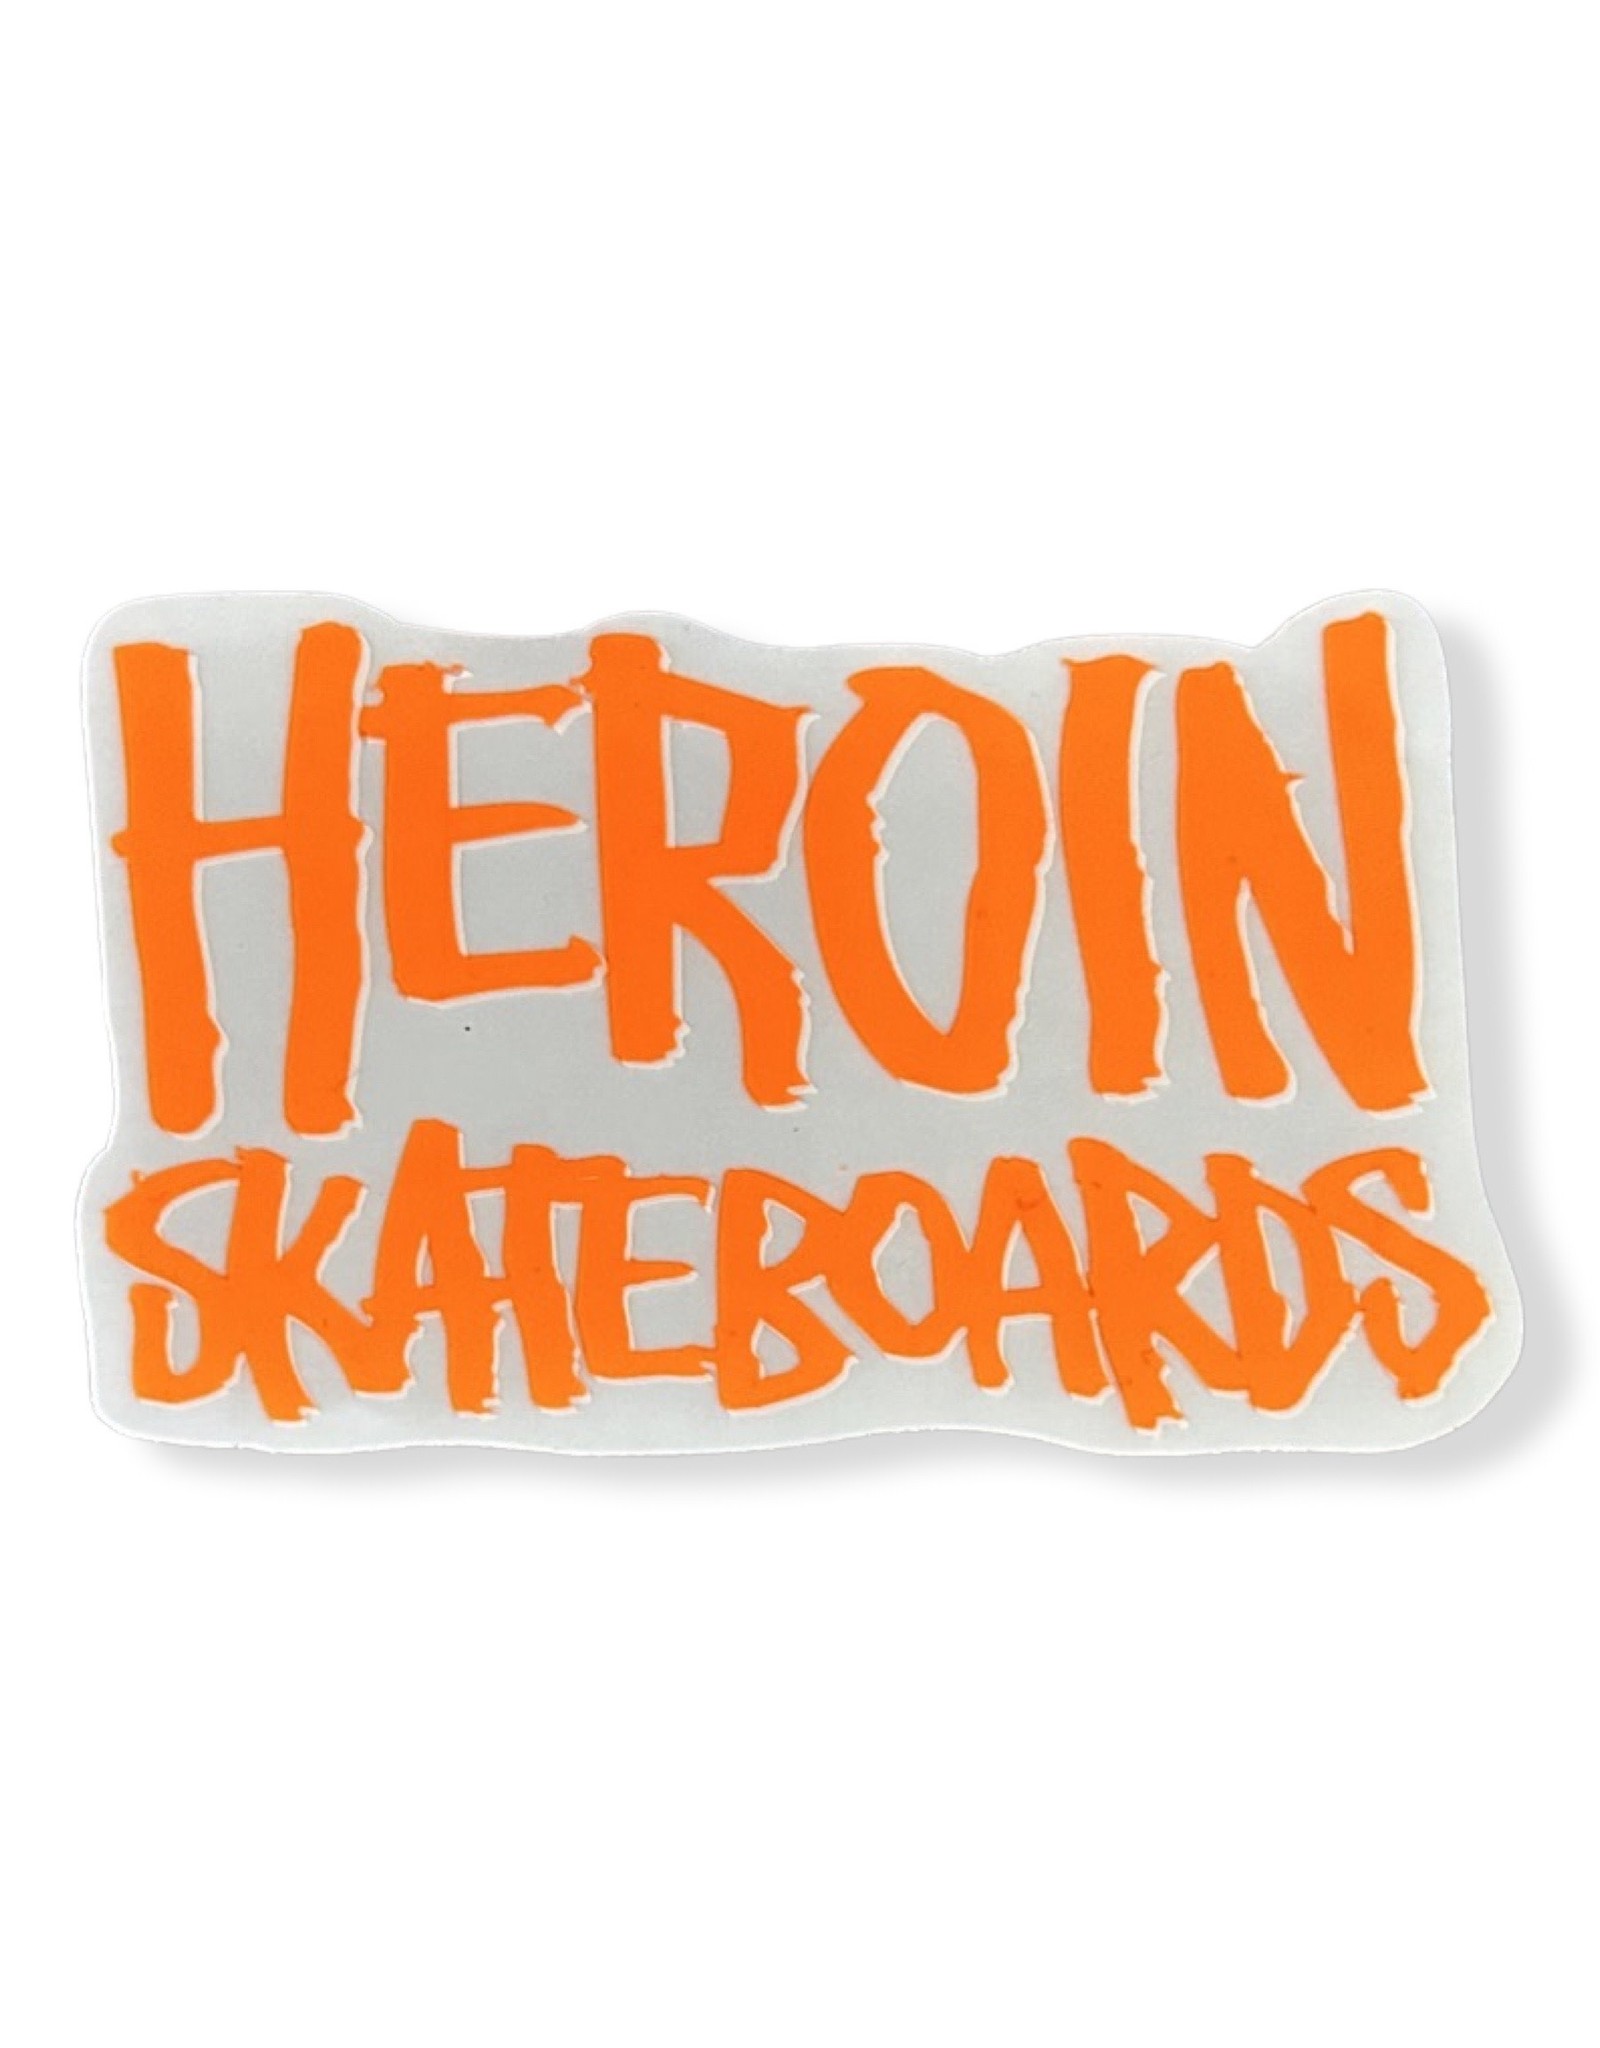 Heroin Heroin Sticker SP 23 Logo Orange